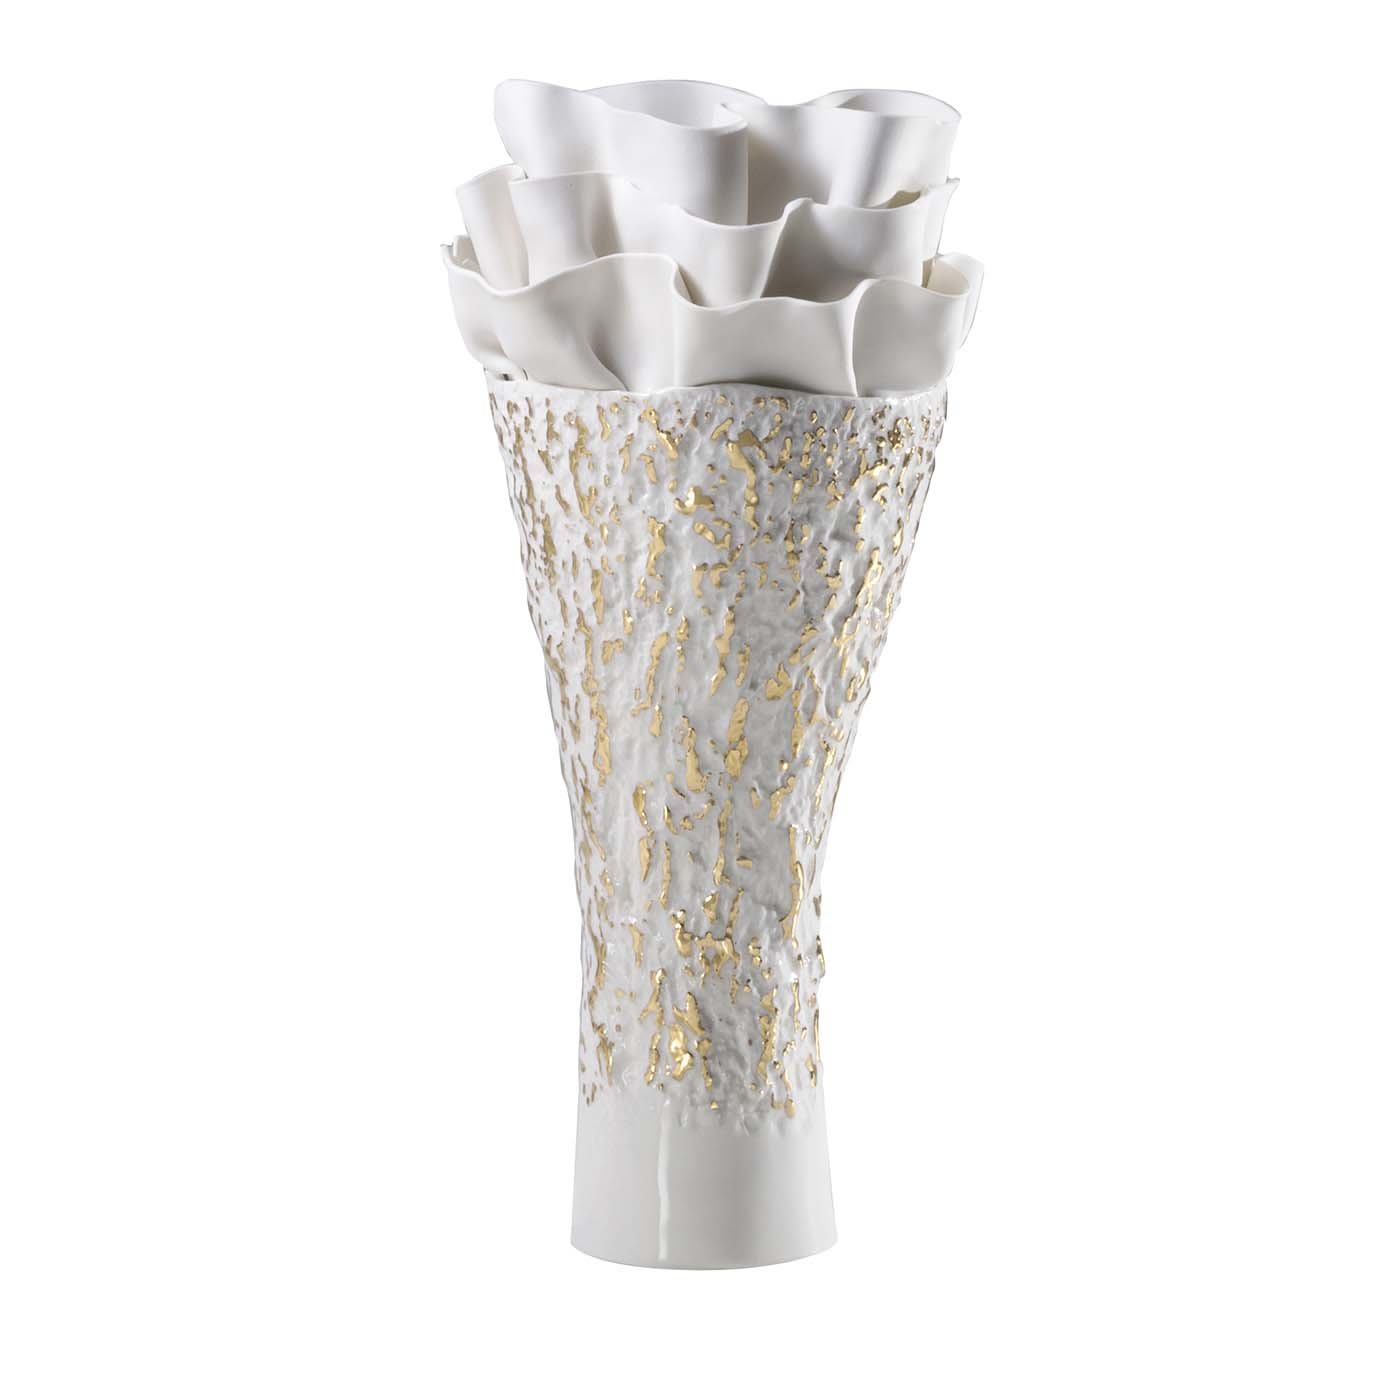 Anthozoa Gold Spots Vase - Fos Ceramiche